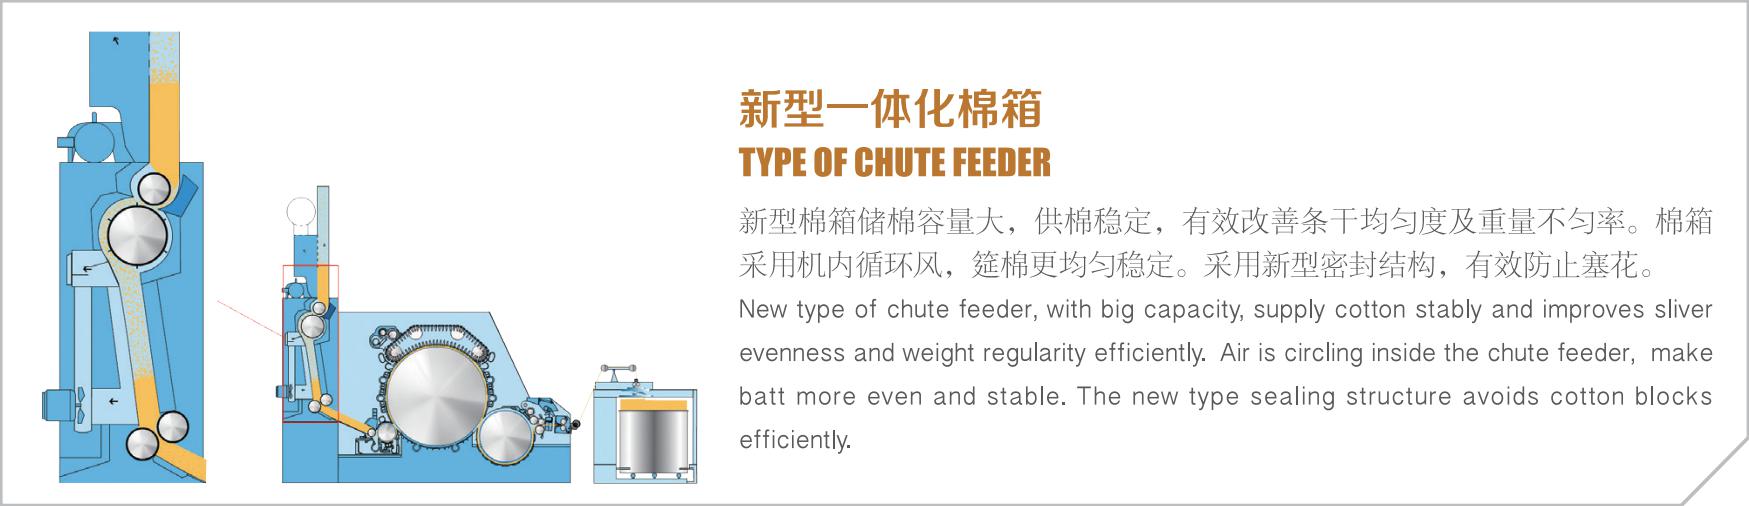 chute feeder.jpg